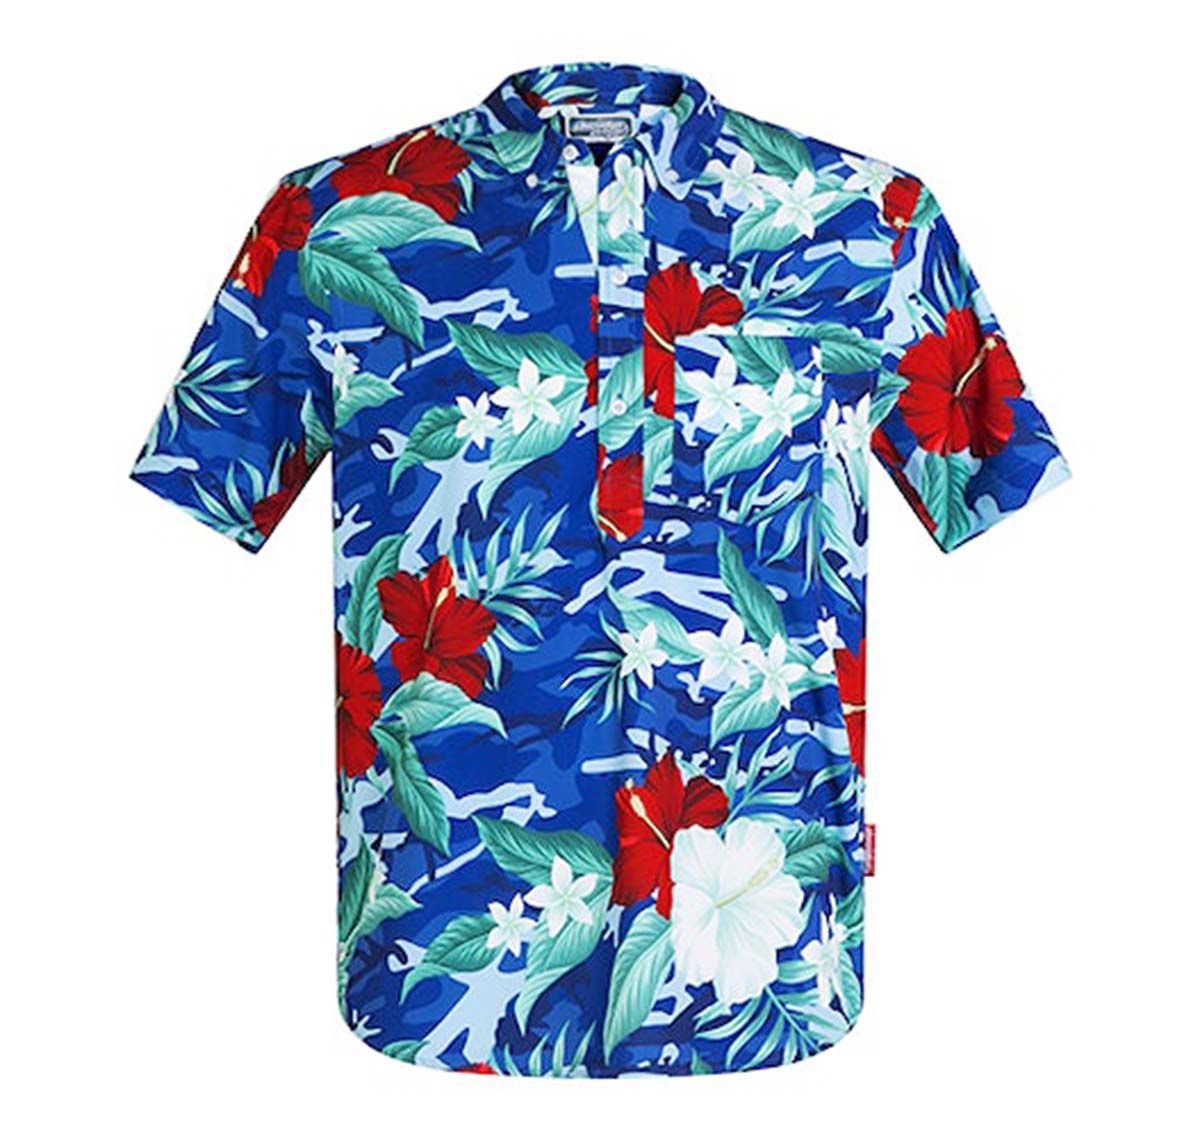 aussieBum Short sleeve shirt VACAY SHIRT CANCUN, multicolor/blue